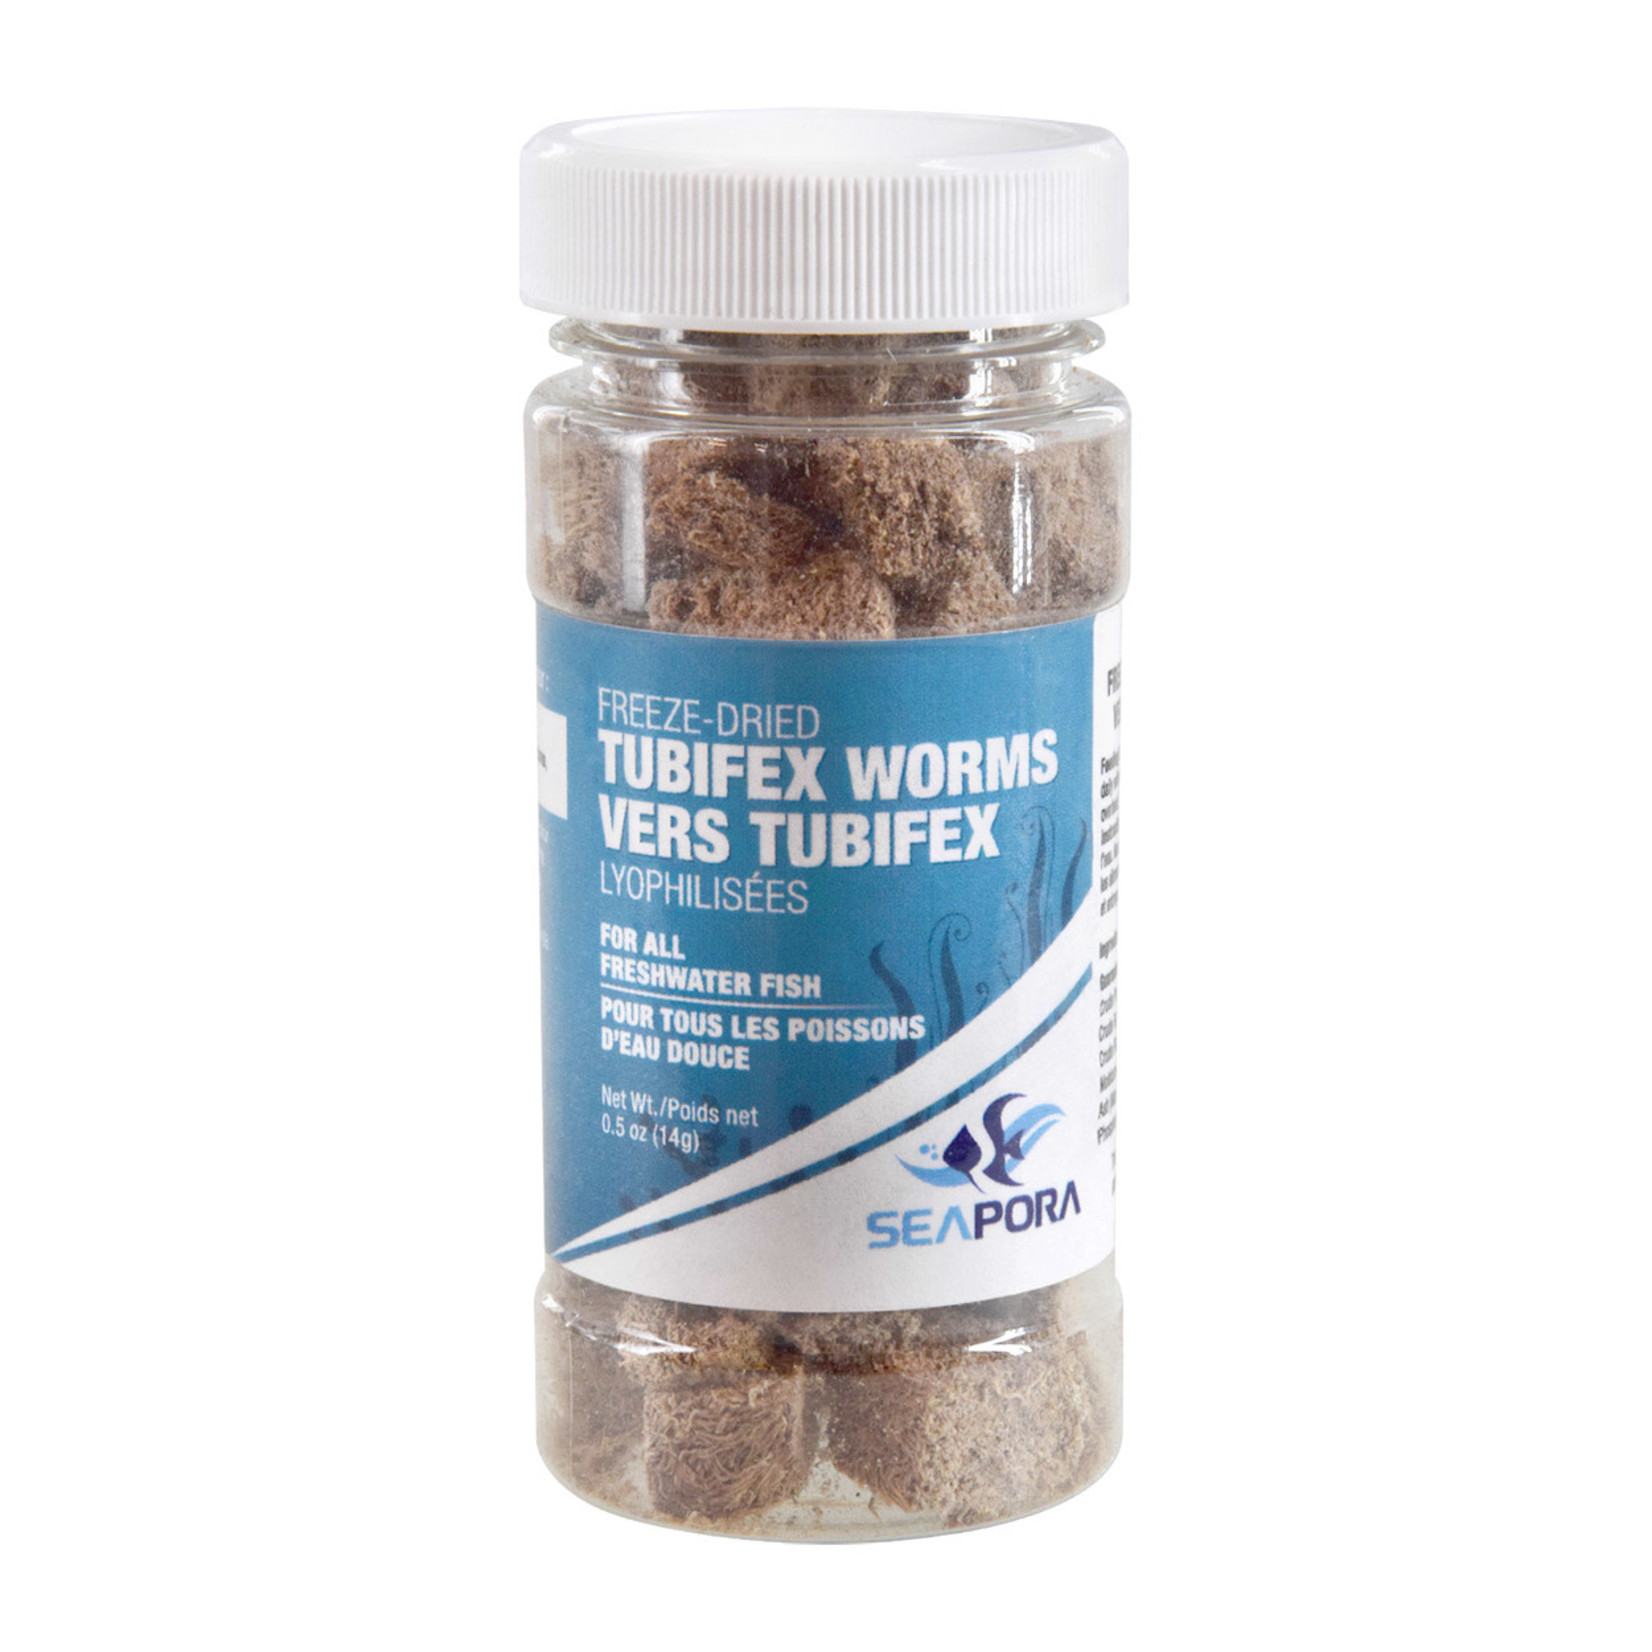 SEAPORA Seapora Freeze-Dried Tubifex Worms - 14g